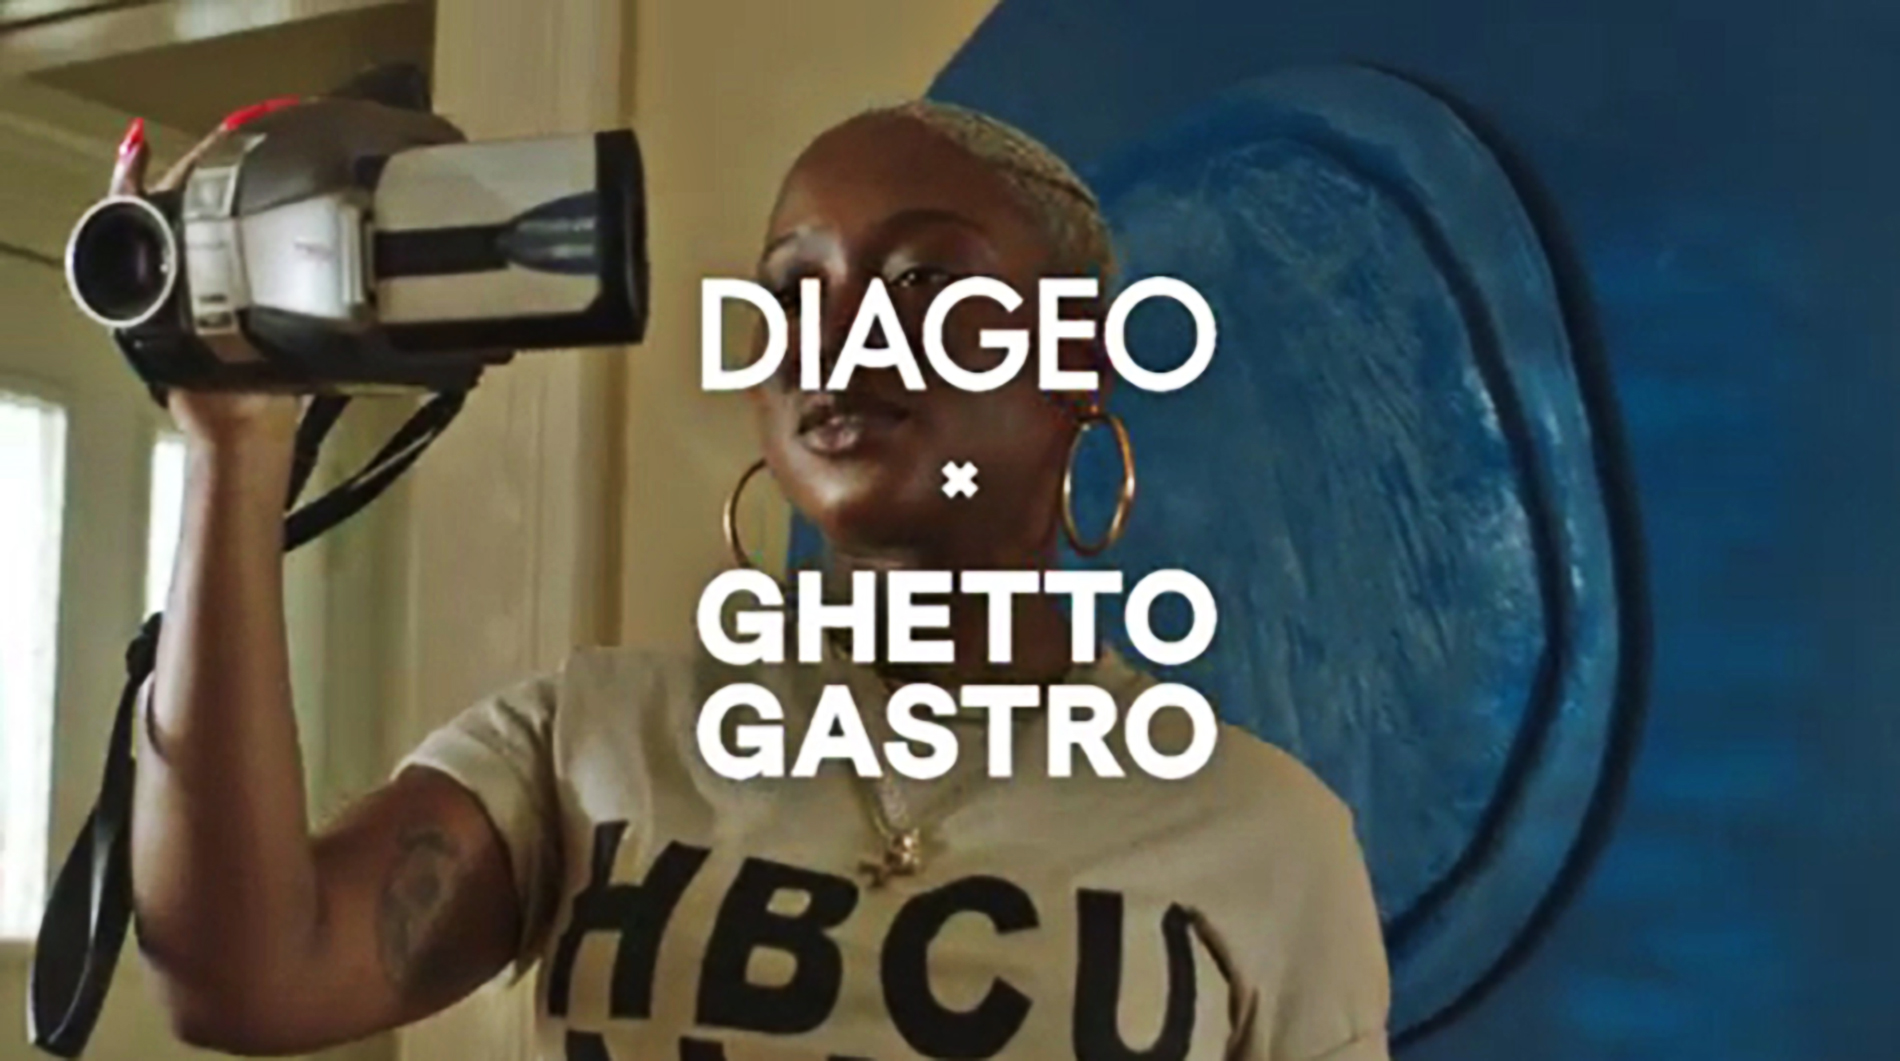 Play Video: DIAGEO x Ghetto Gastro